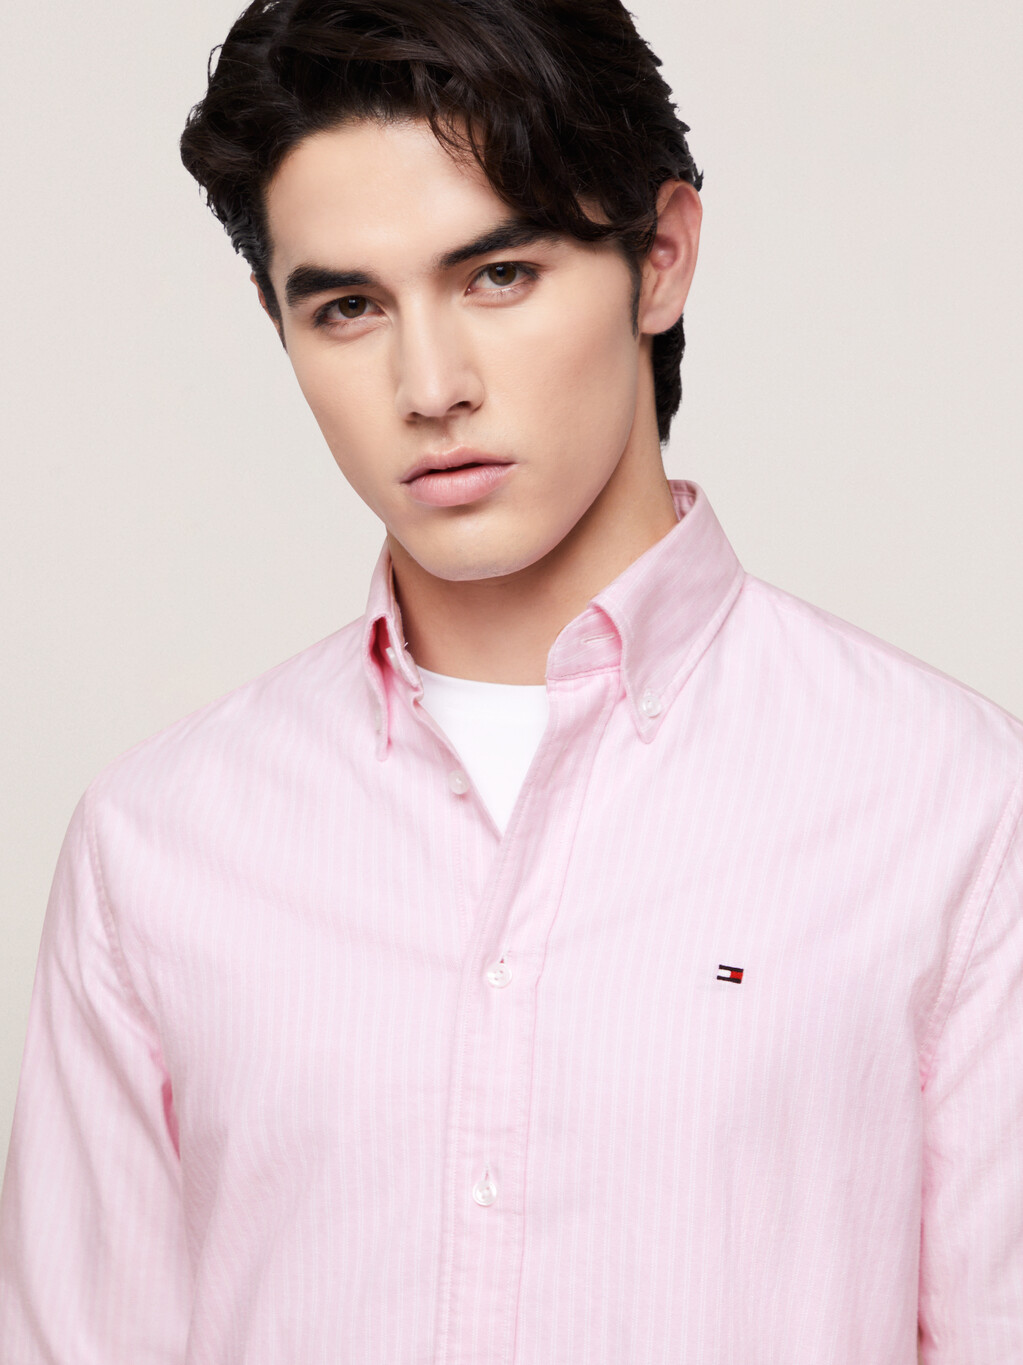 條紋標準版型裇衫, Classic Pink / Optic White, hi-res